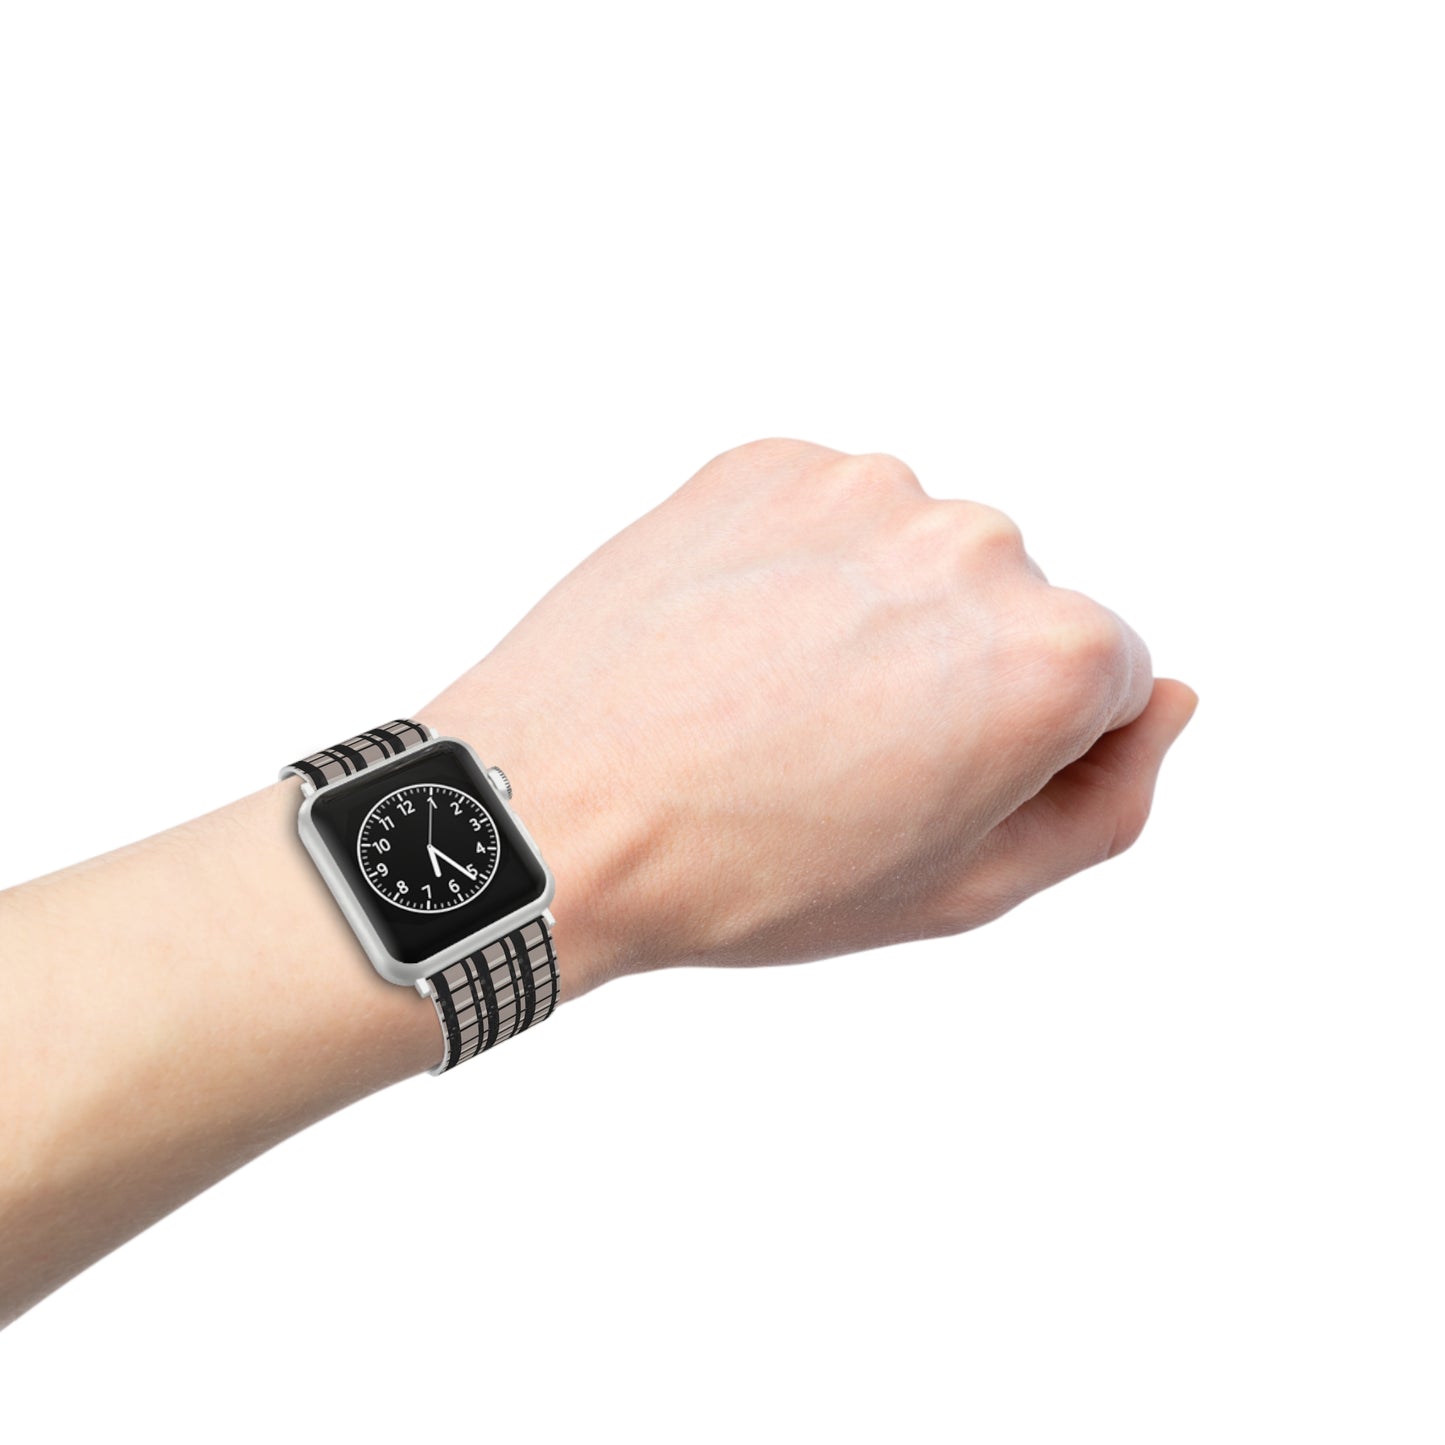 Tan, Black, and Black Glitter Plaid Apple Watch Band